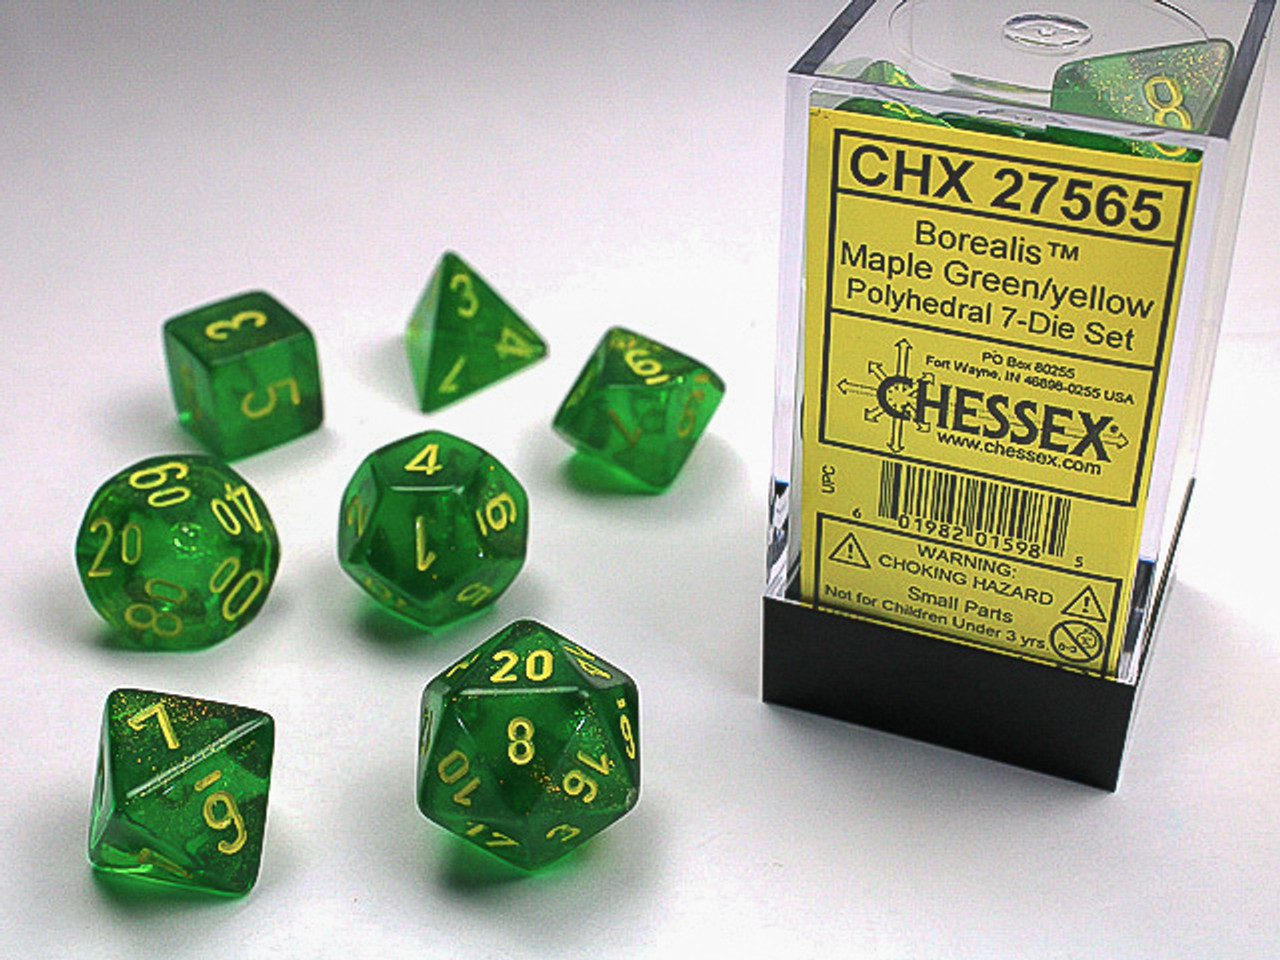 27565 - Borealis® Polyhedral Maple Green/yellow 7-Die Set